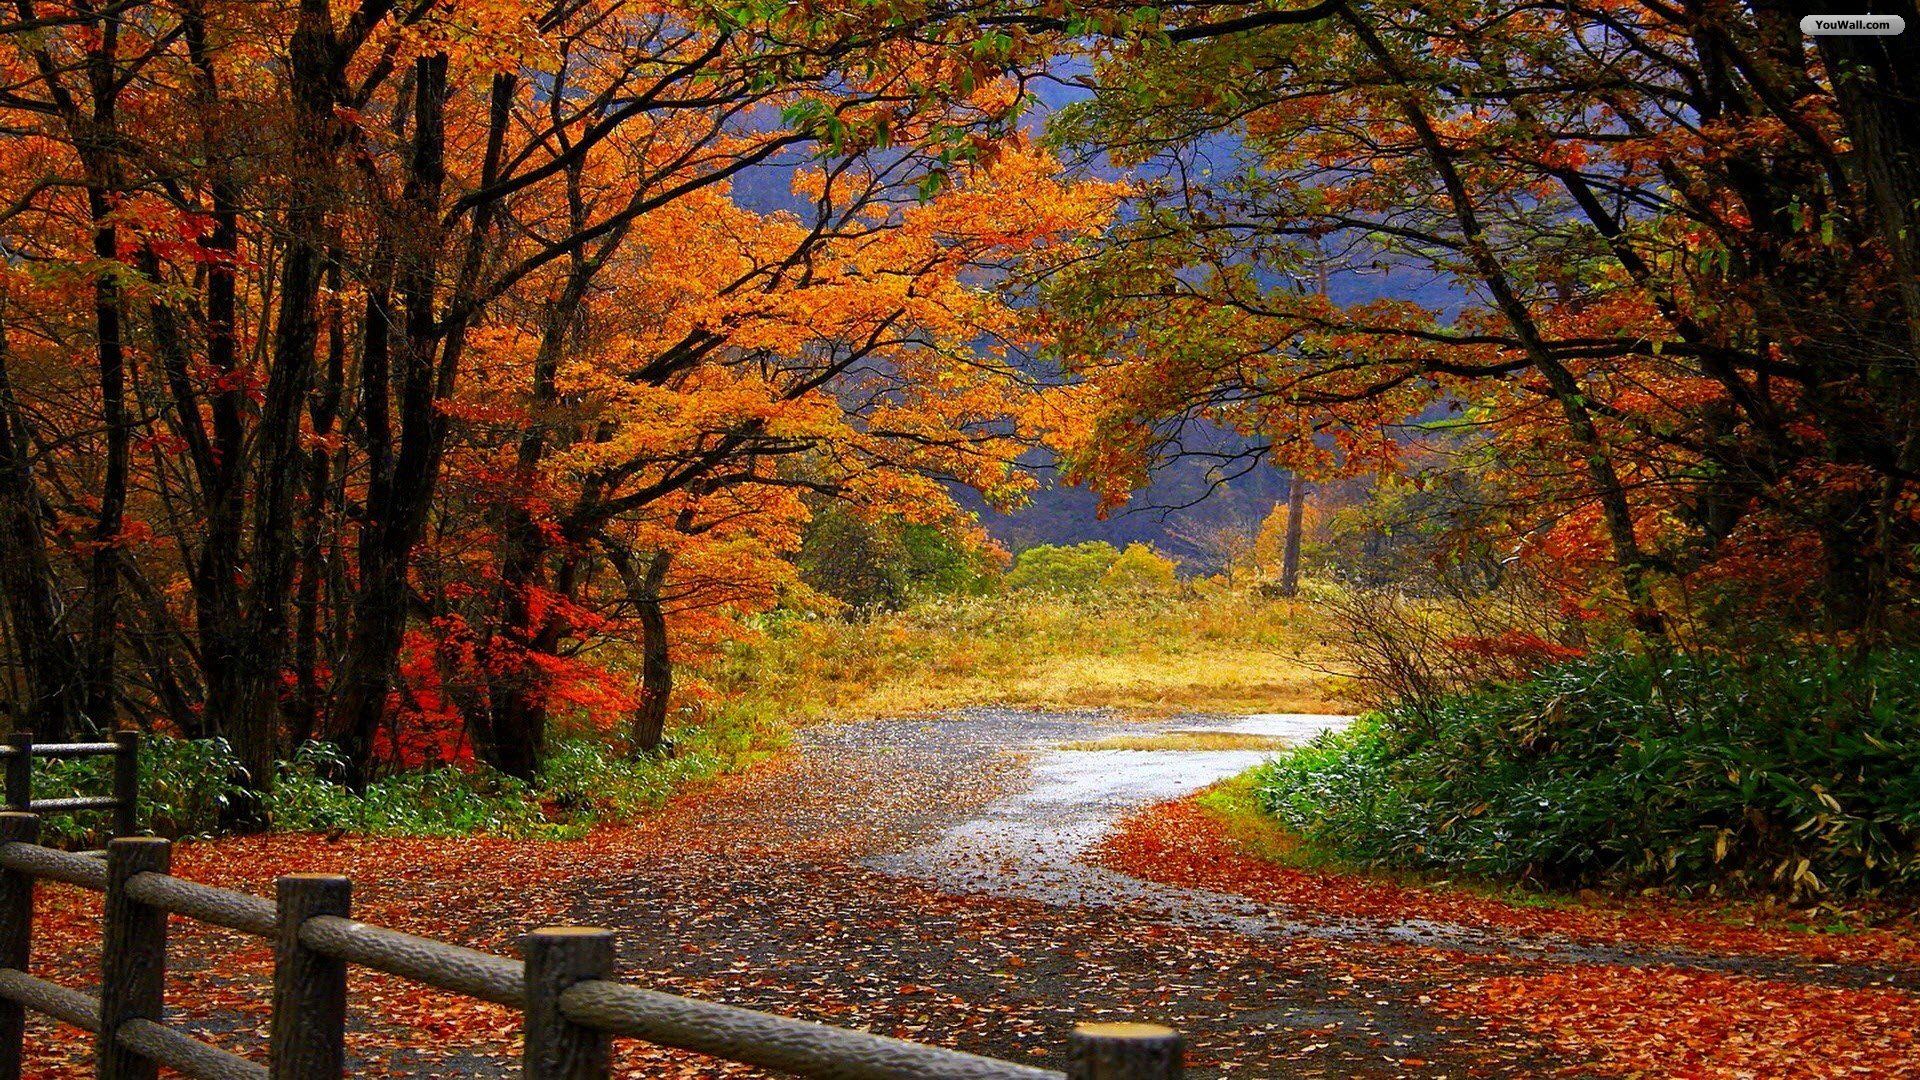 YouWall - Autumn Scenery Wallpaper - wallpaper,wallpapers,free ...